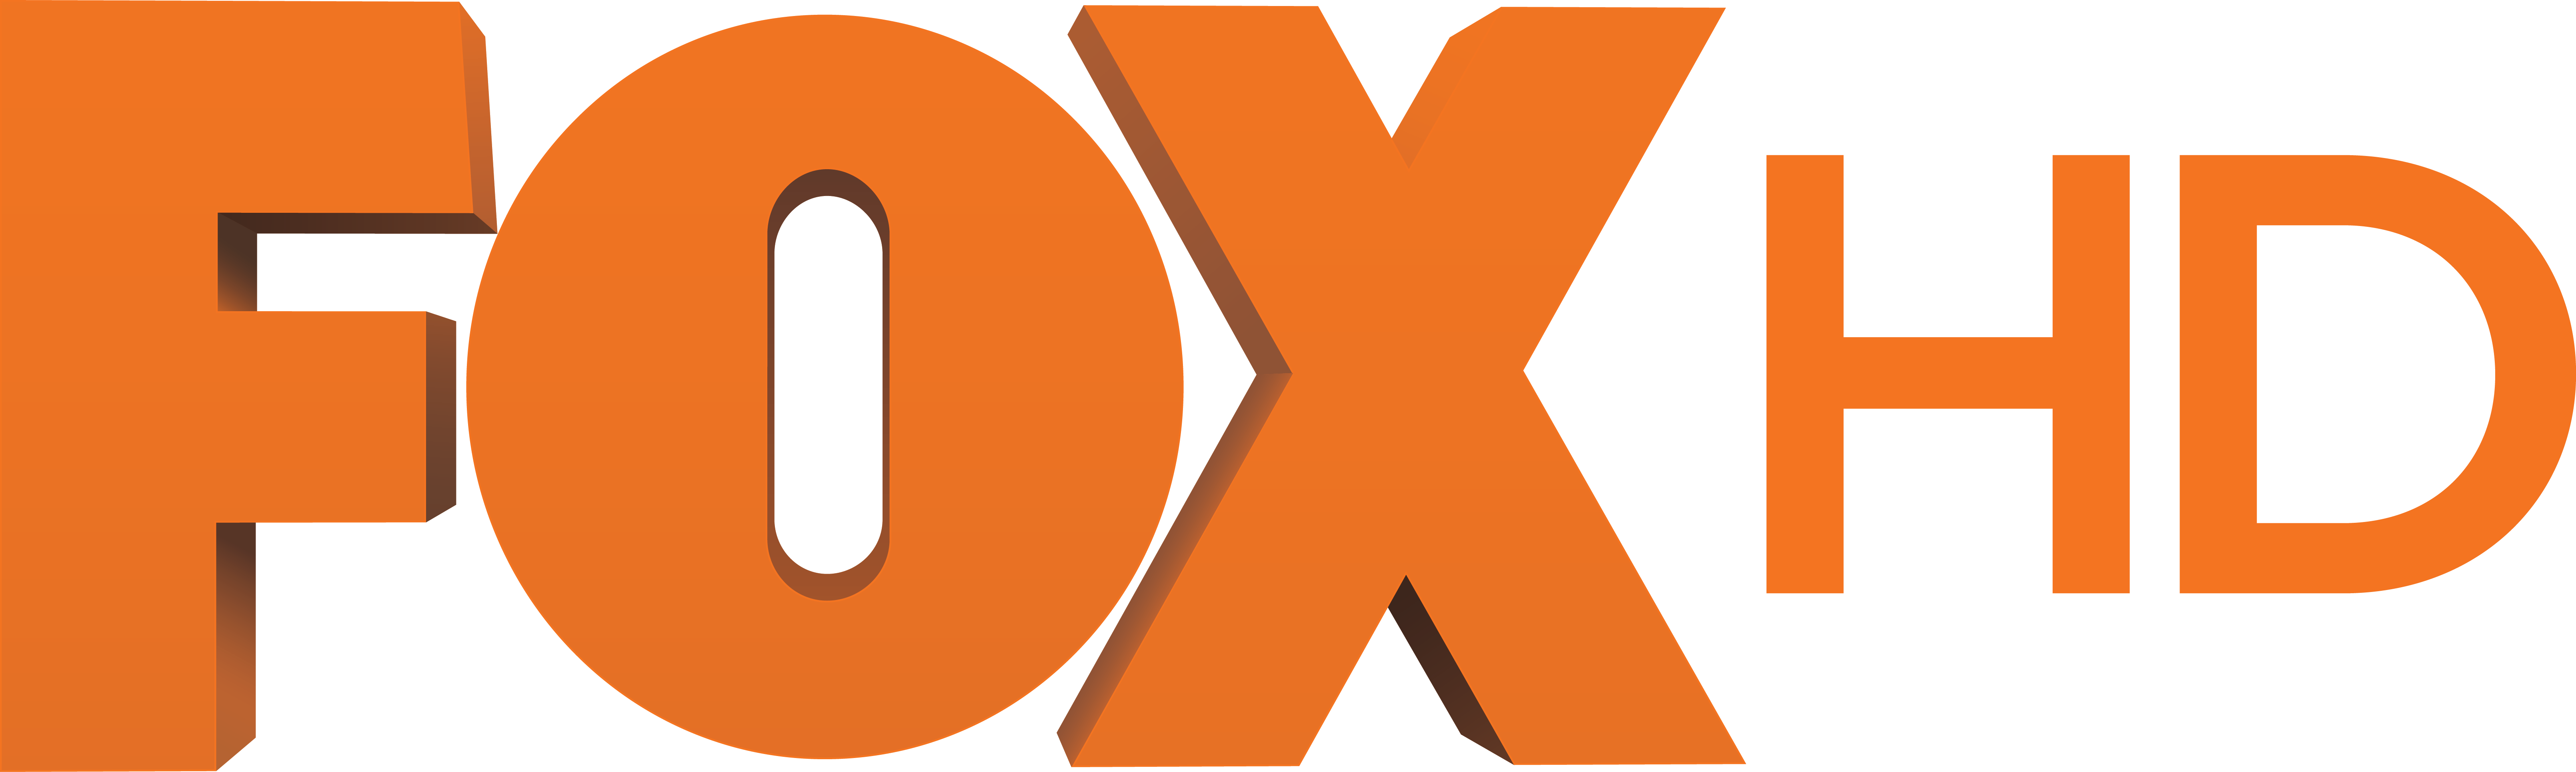 Телеканал Fox. Лого телеканала Фокс.